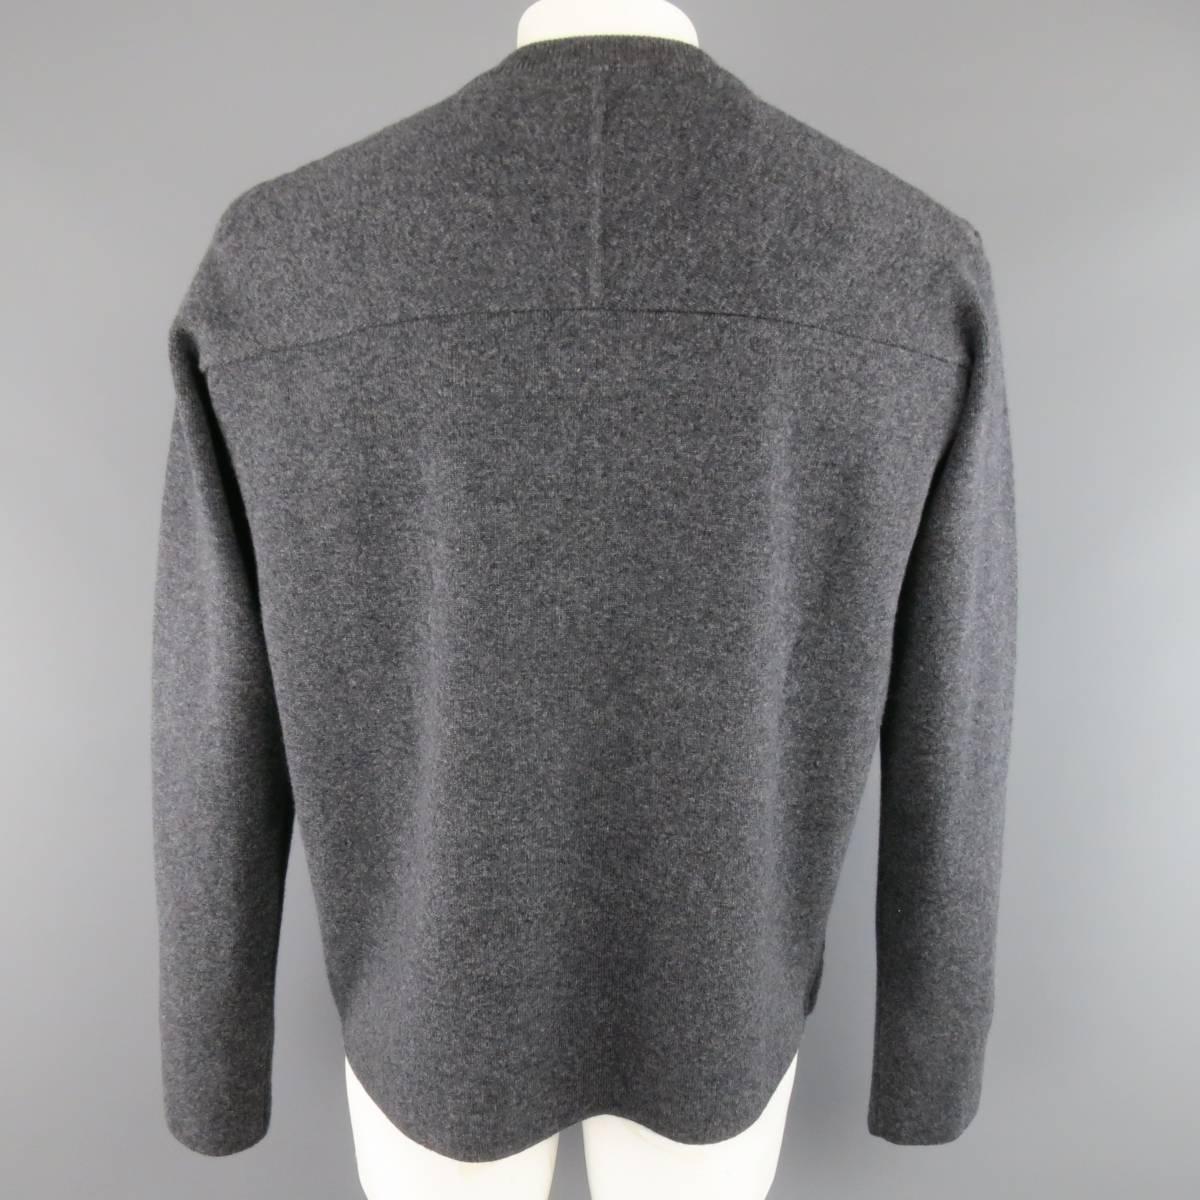 Men's JIL SANDER Sweater - Heather Gray Textured Wool / Cashmere Pullover 3